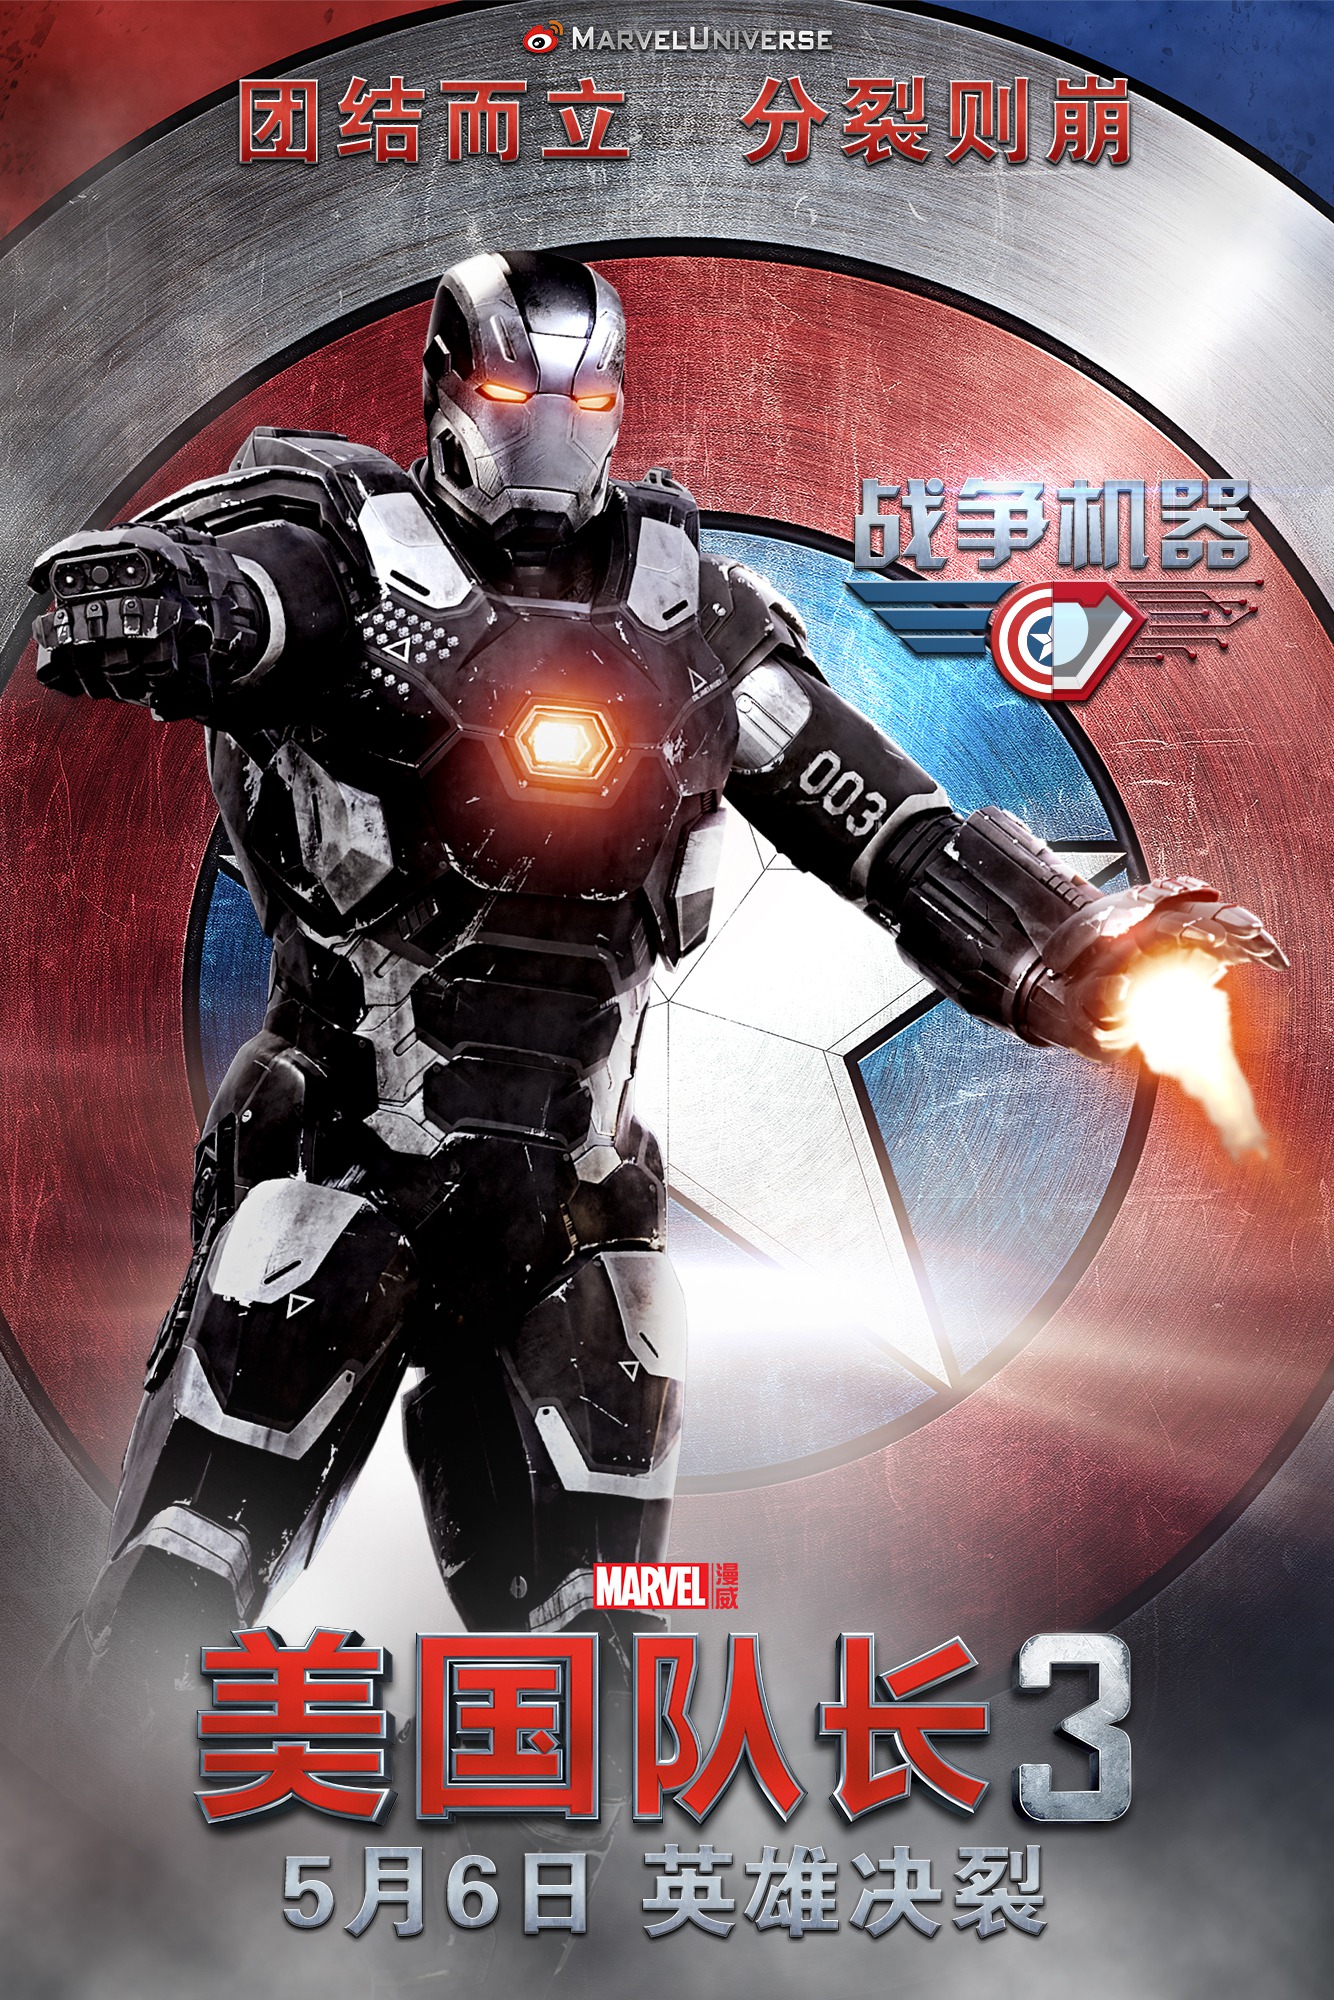 Mega Sized Movie Poster Image for Captain America: Civil War (#37 of 42)